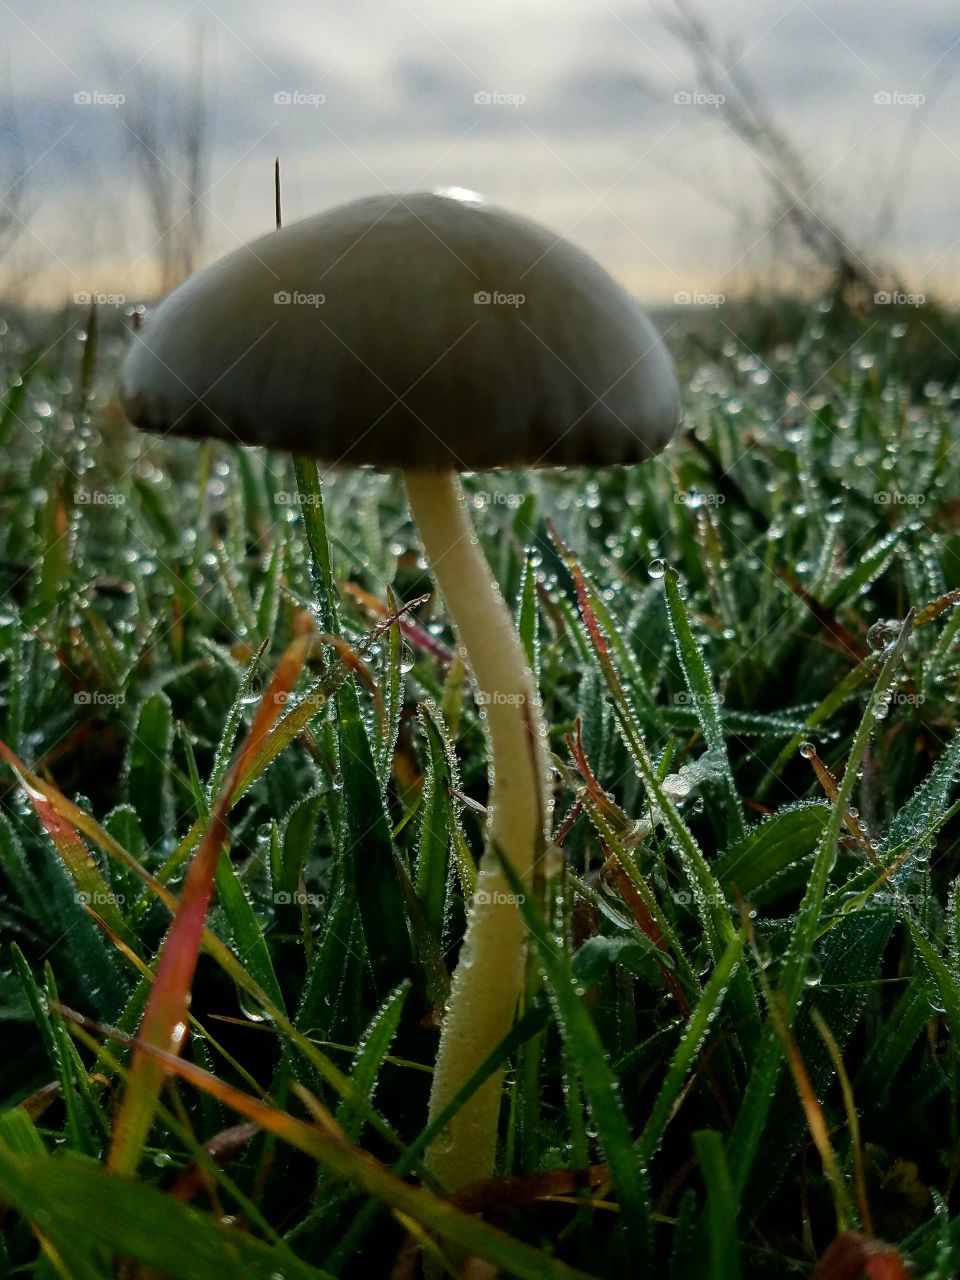 Morning dew on the fungi